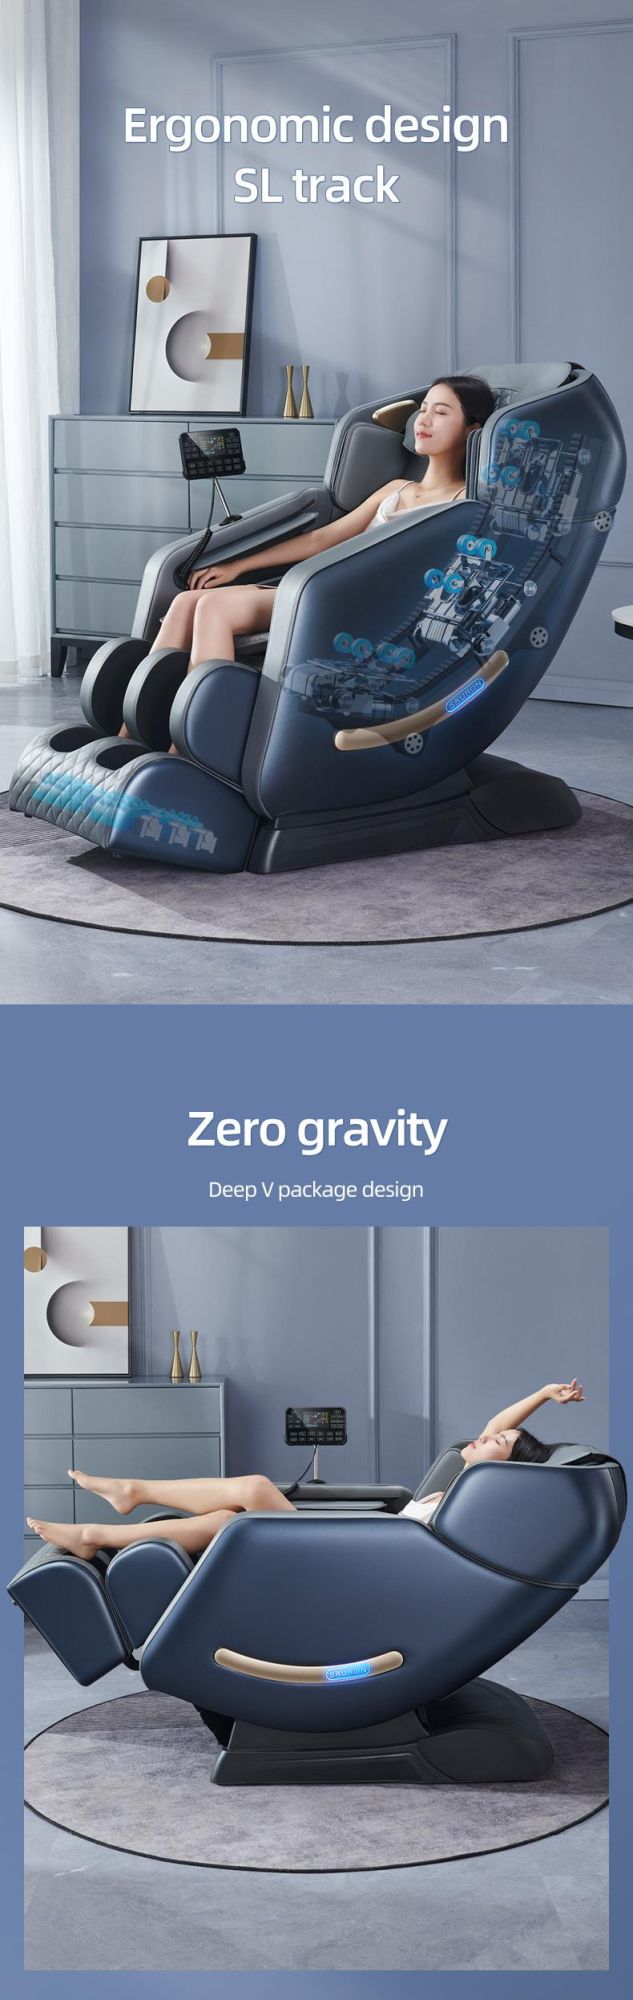 Sauron E300 2022 New SL Track 3D Full Body Thai Stretch Zero Gravity Massage Chair Recliner with Foot Massage